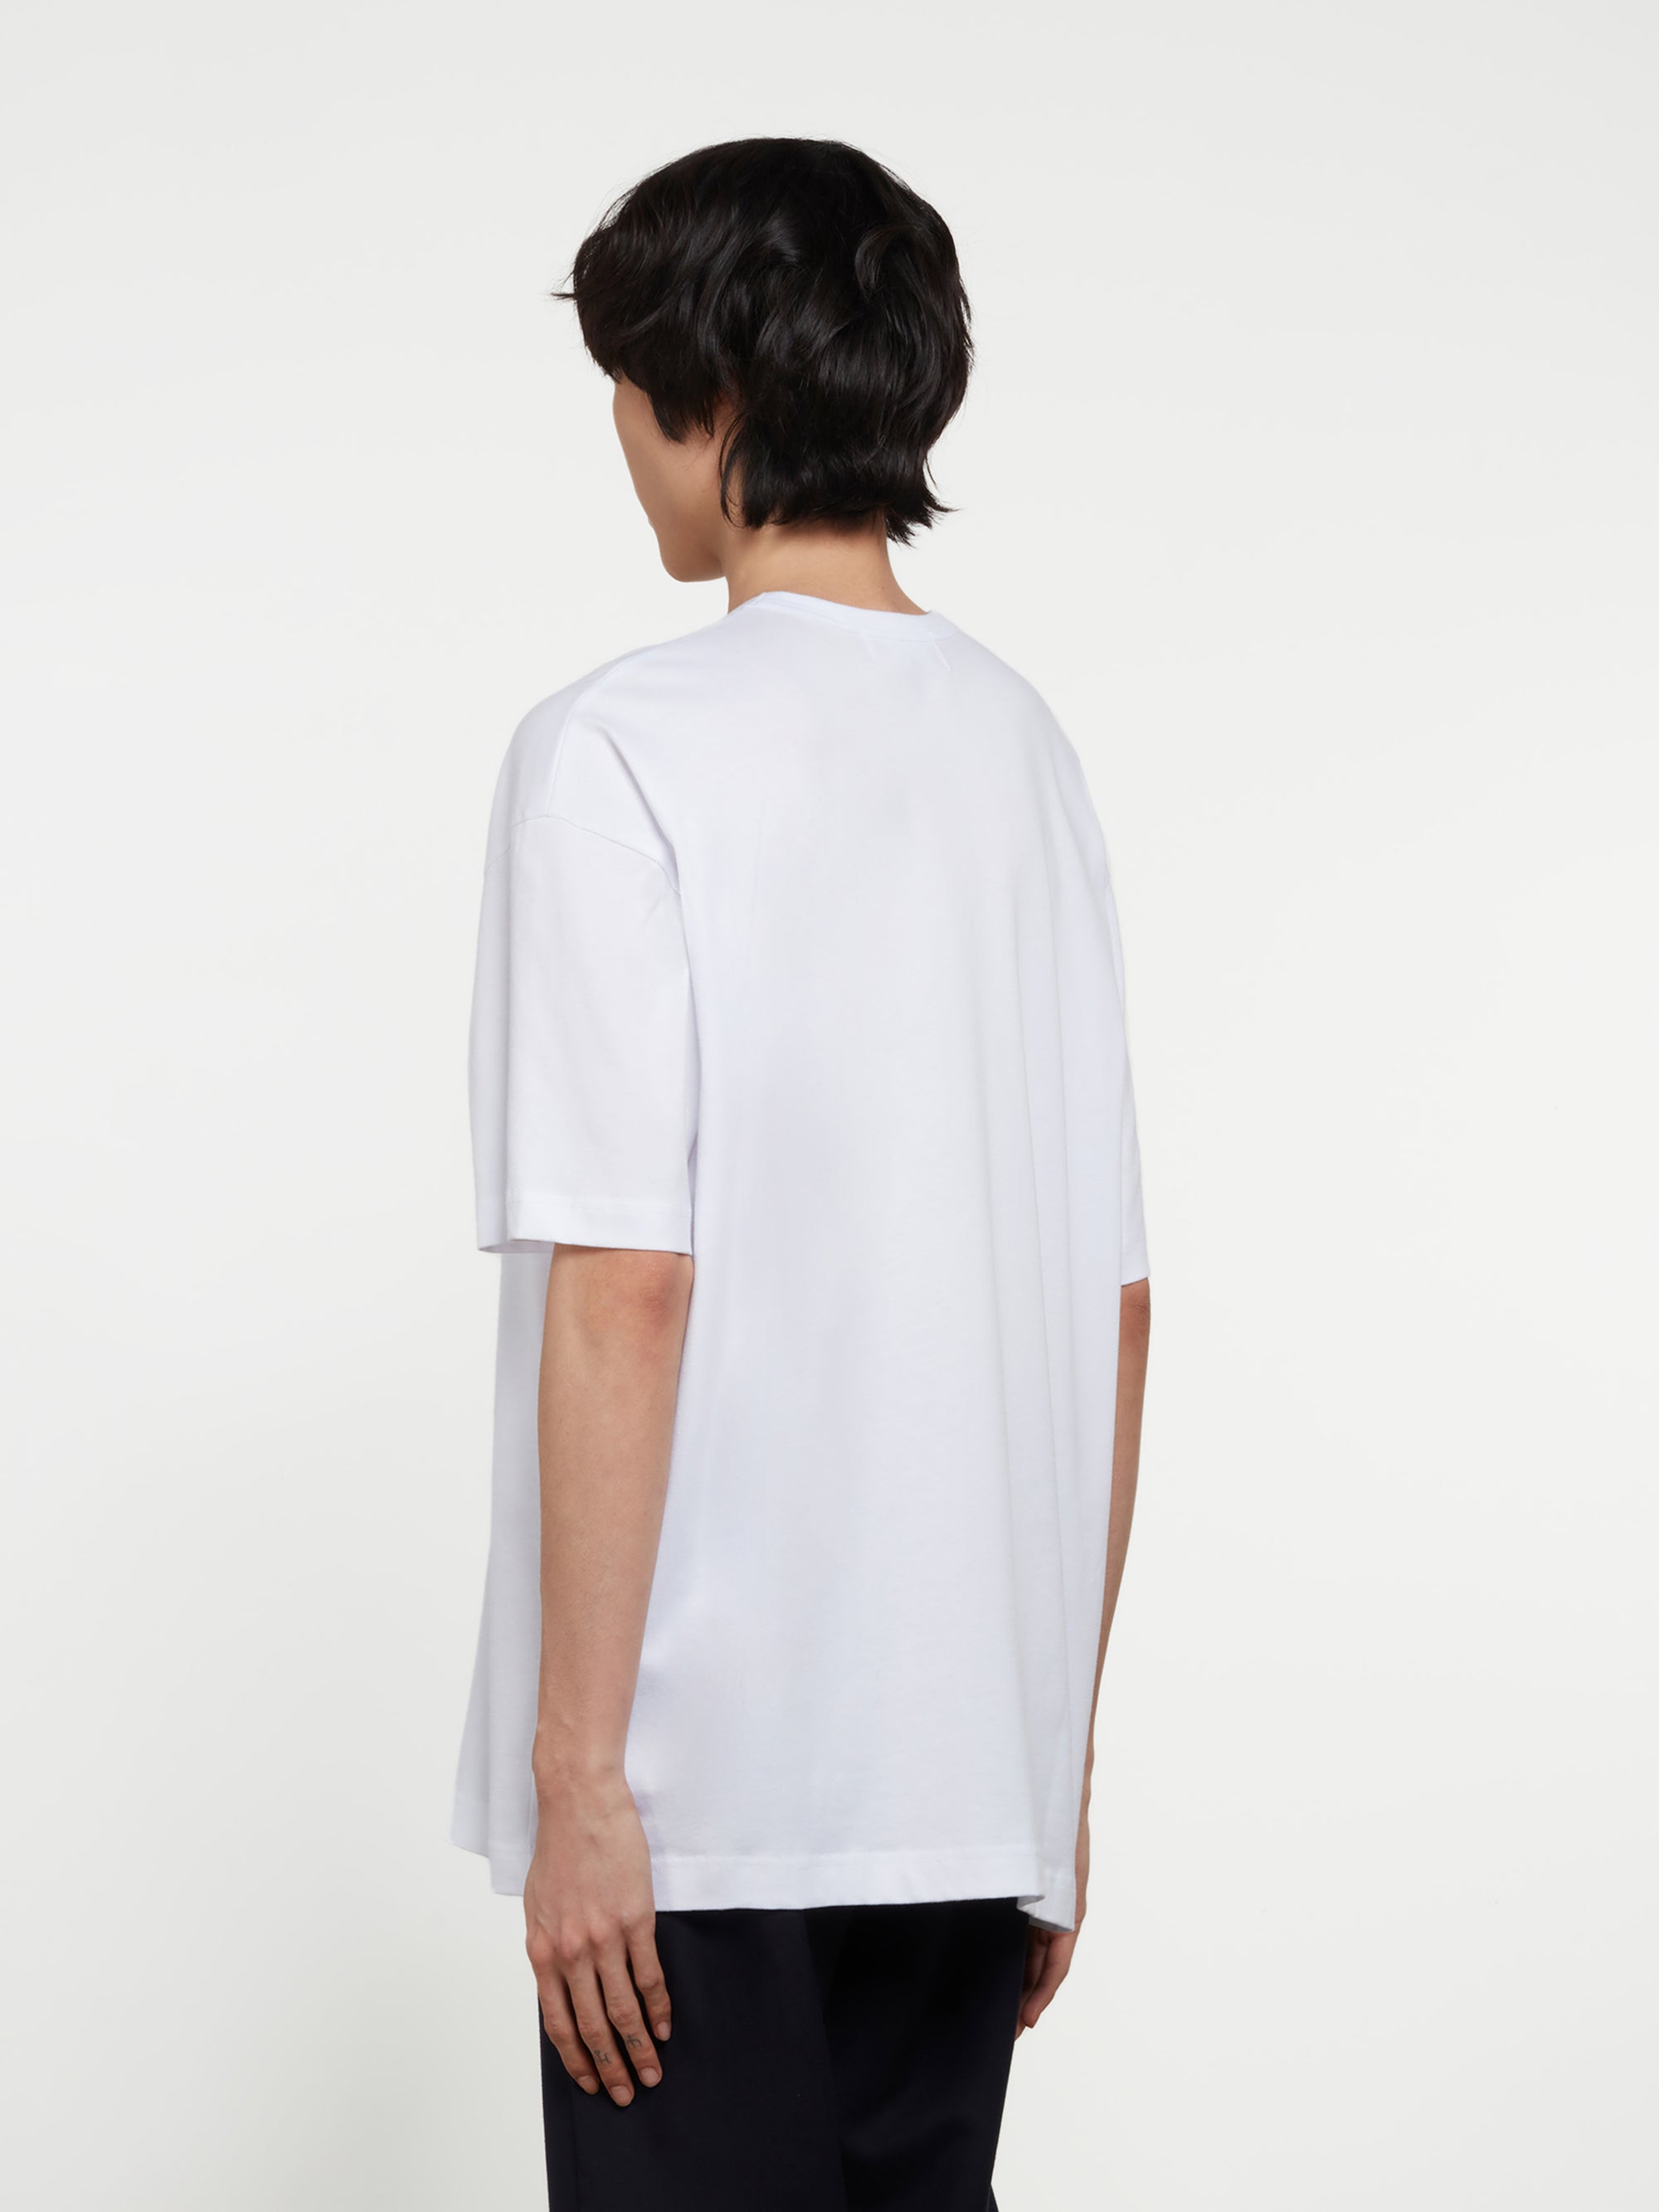 CDG Shirt - Lacoste Men’s Printed T-Shirt - (White) view 3